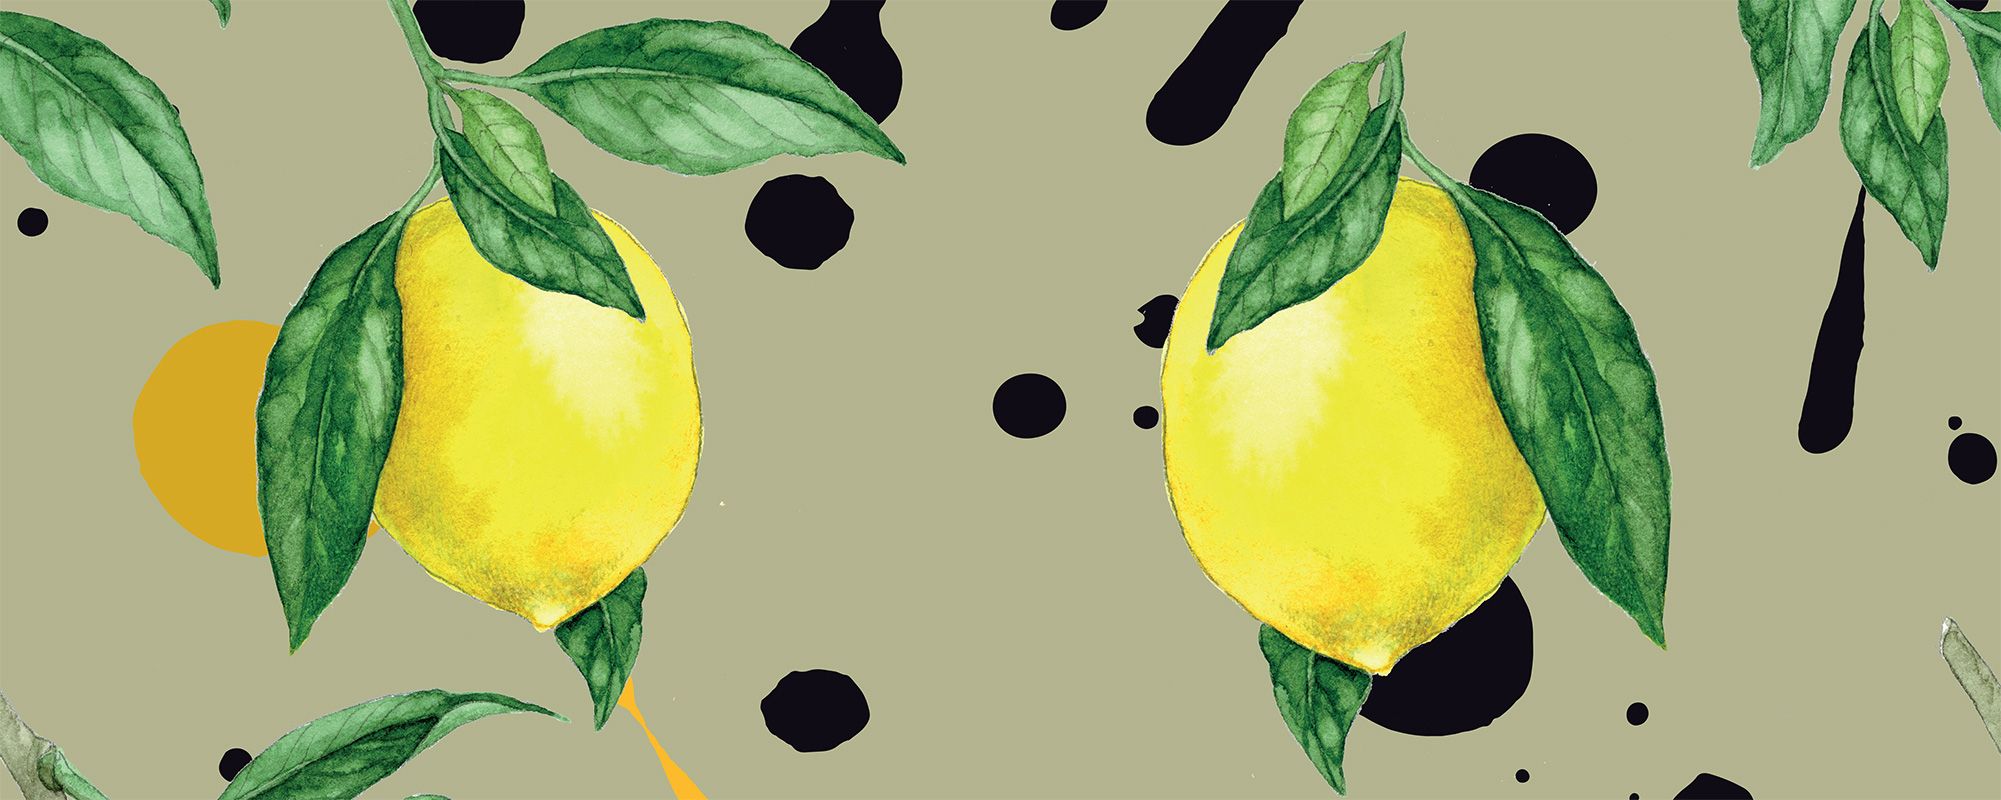 Illustration of lemons on a grey background - Lemon